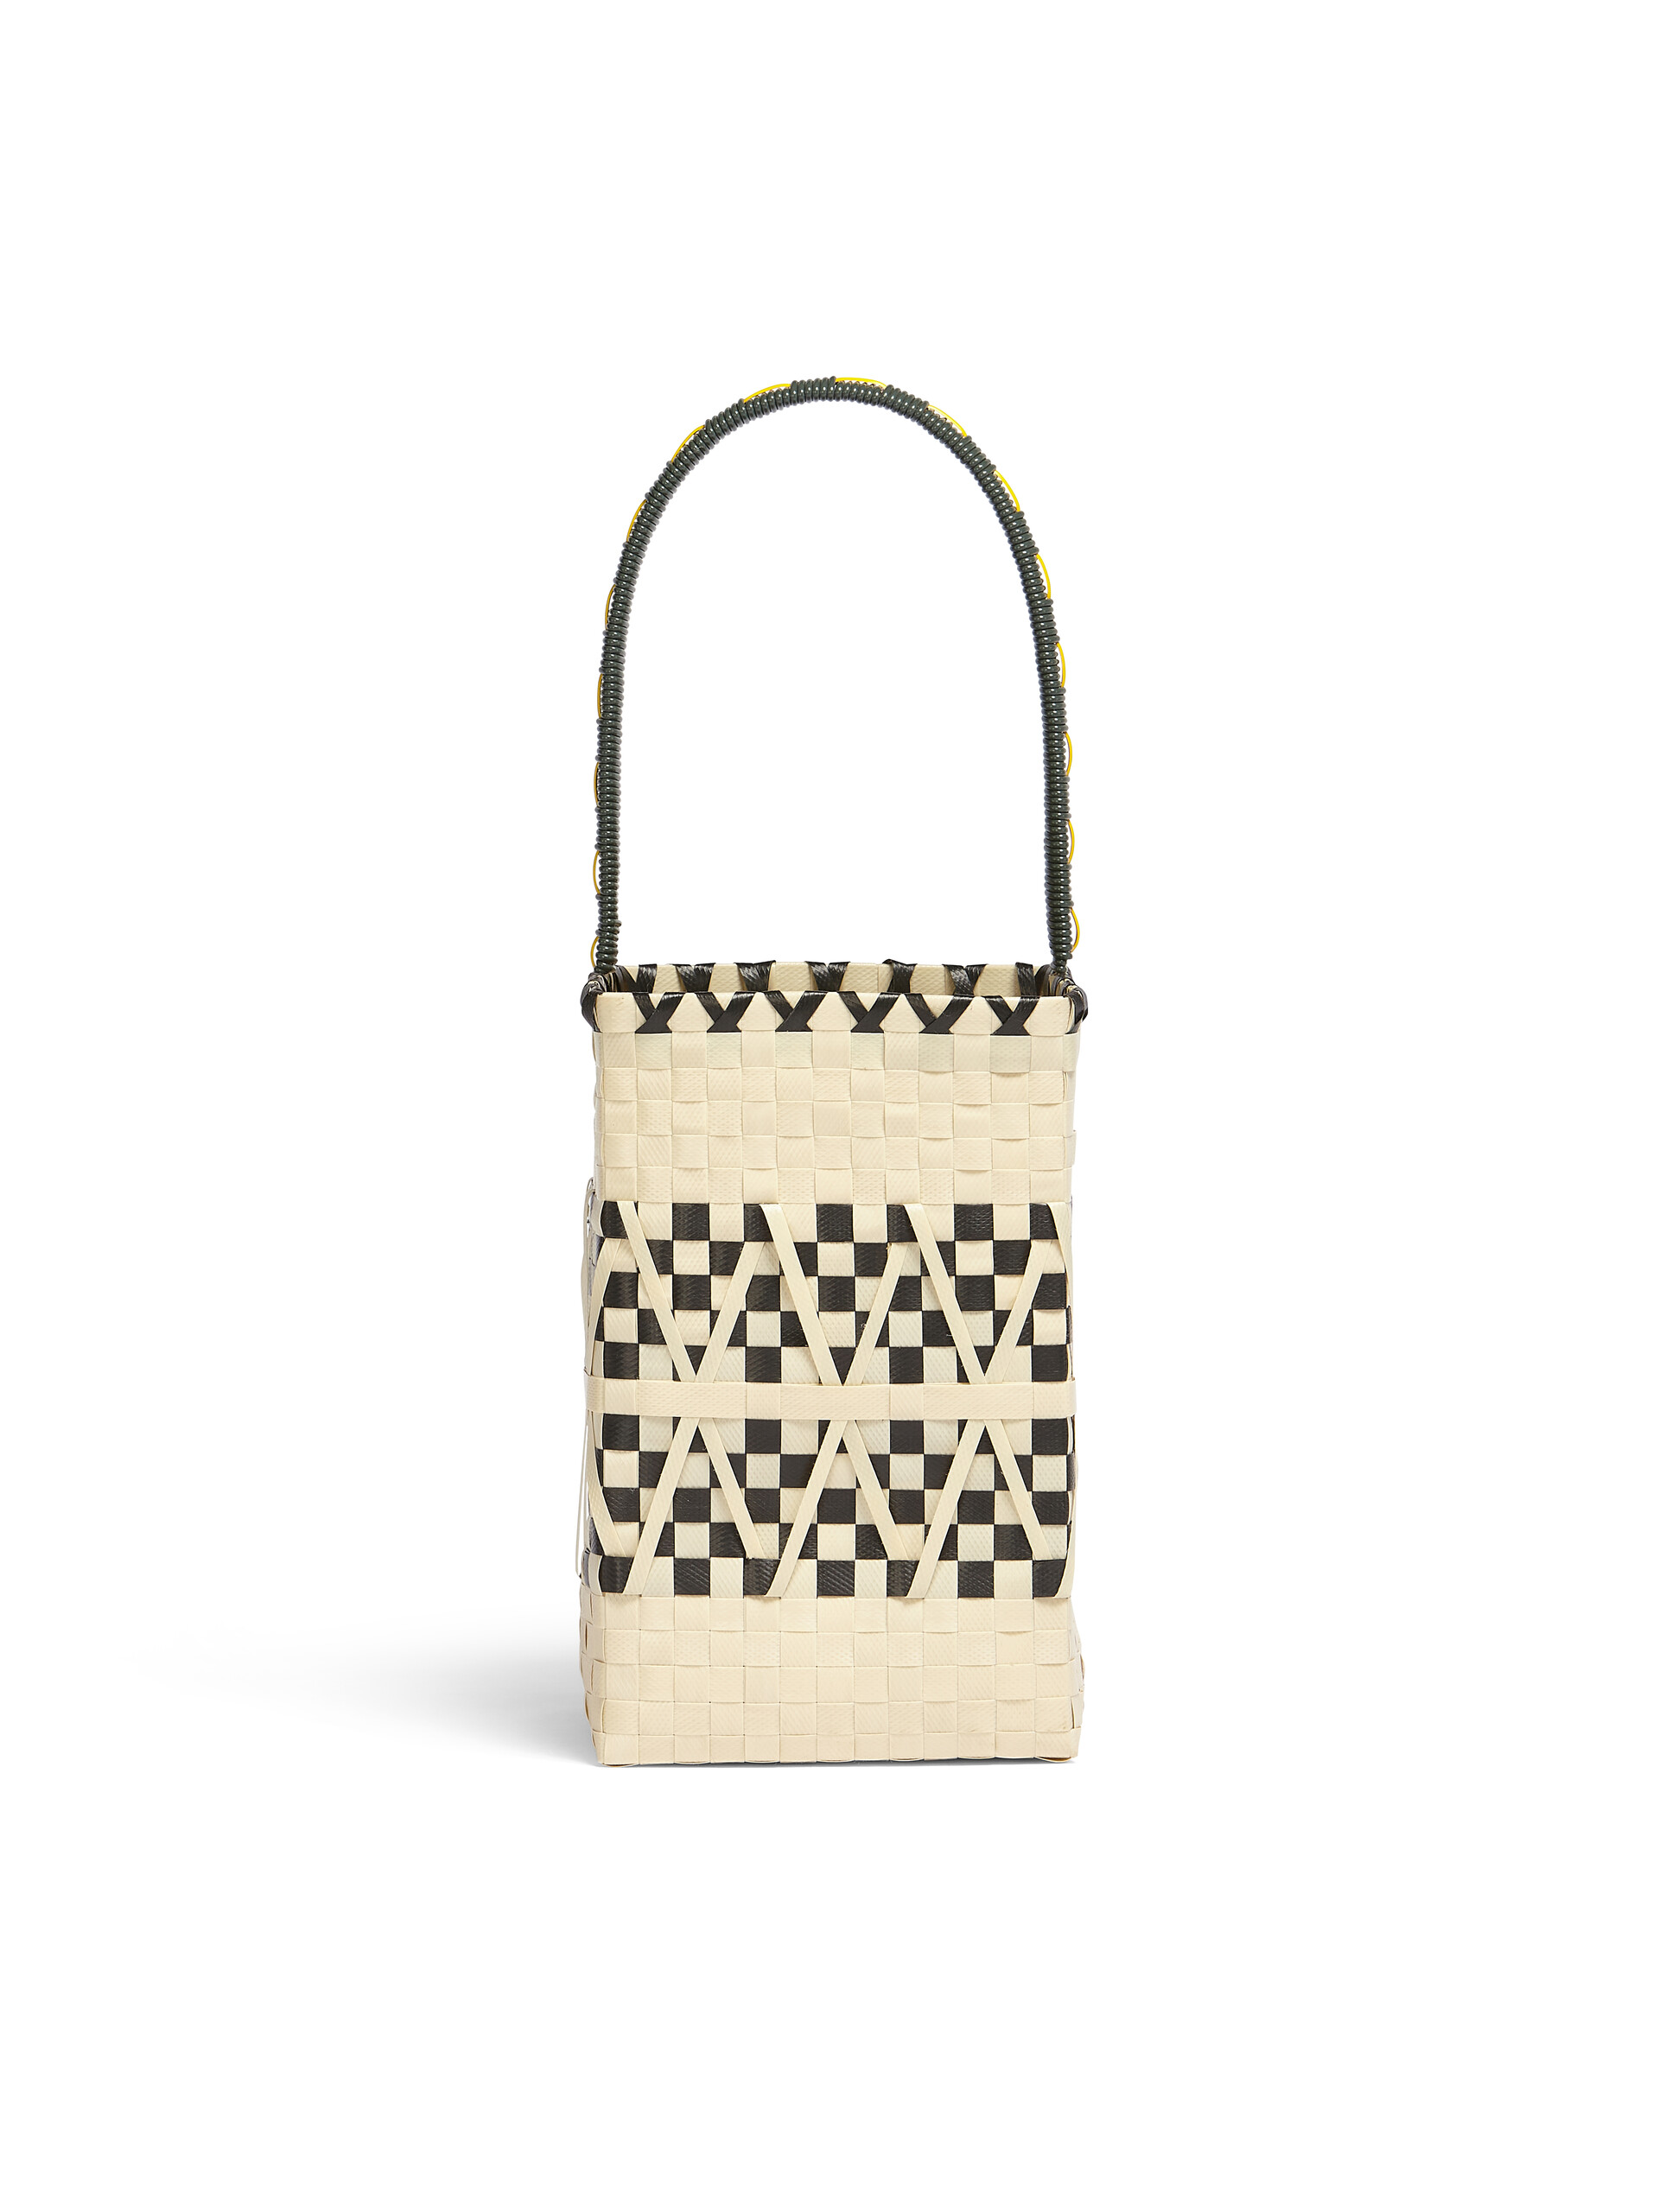 MARNI MARKET STENCIL black and white bucket bag - Shopping Bags - Image 3